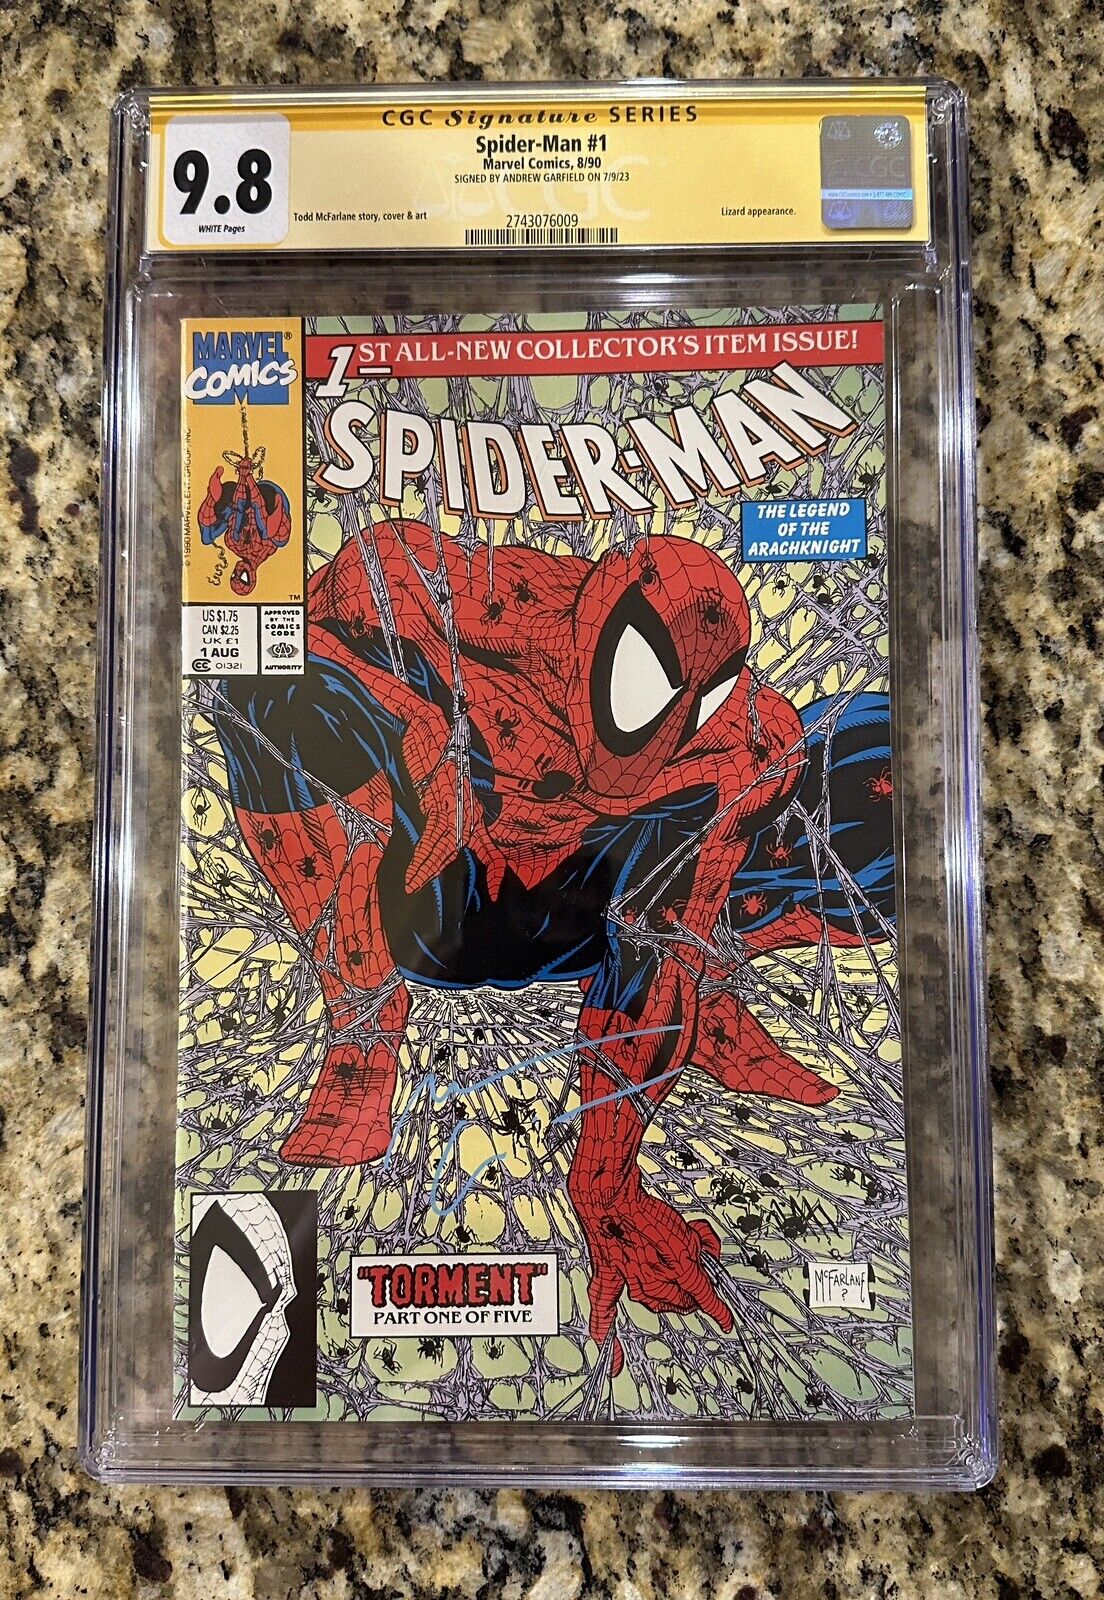 Andrew Garfield Signed Autograph CGC 9.8 - Spider-Man #1 1990 - Marvel Comics